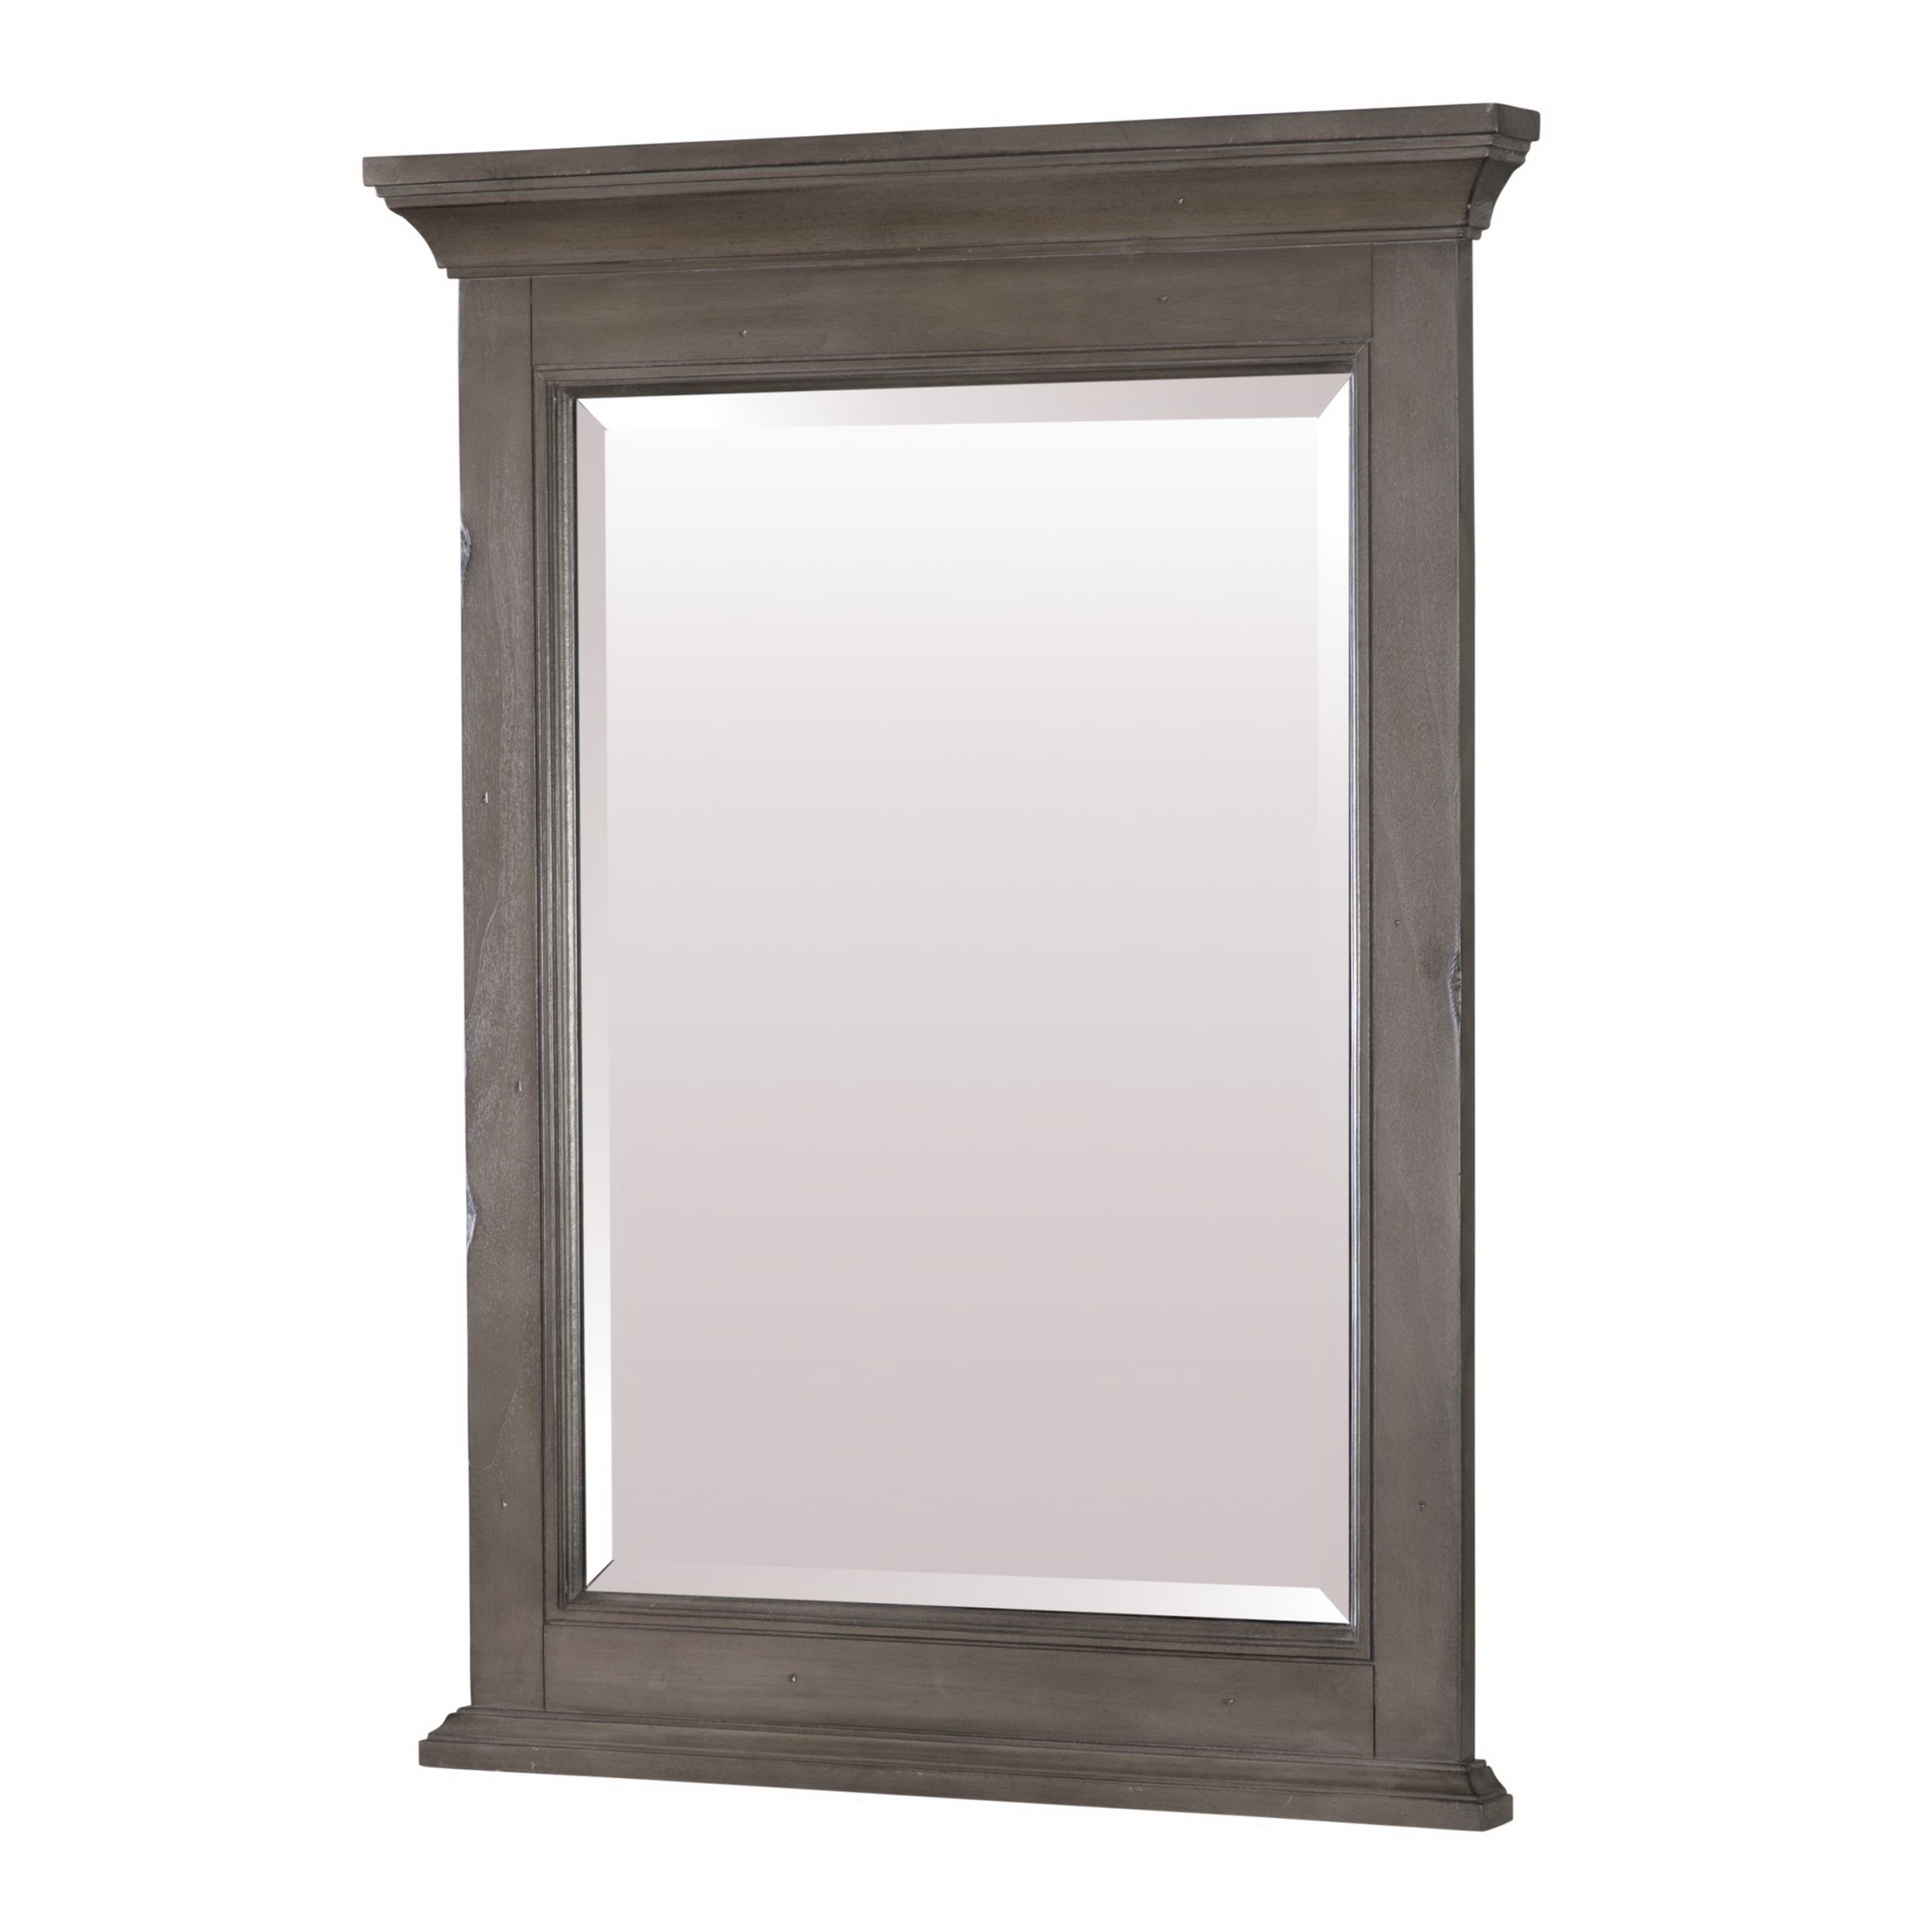 Brantley Series BAGM2432 Framed Mirror, Rectangular, 24 in W, 32 in H, Wood Frame, Wall Mounting